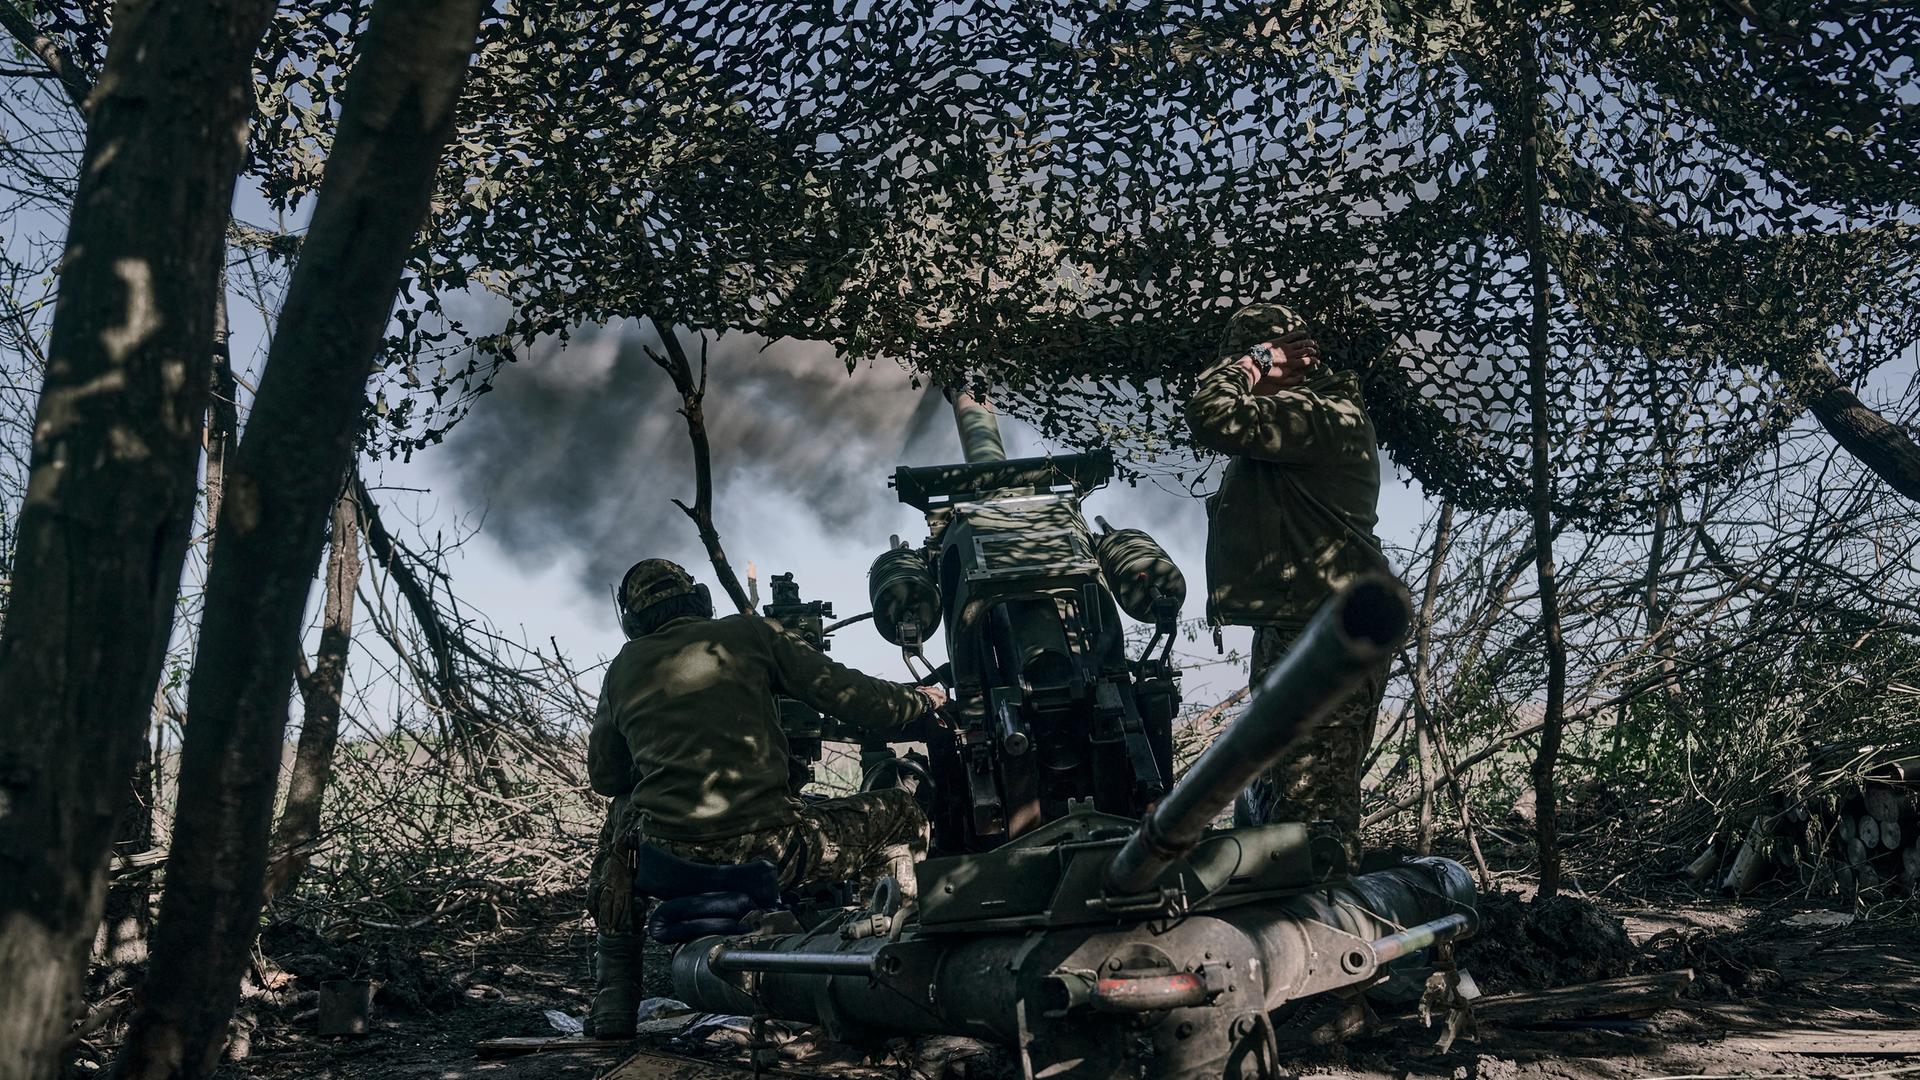 Newsblog zum Ukraine-Krieg